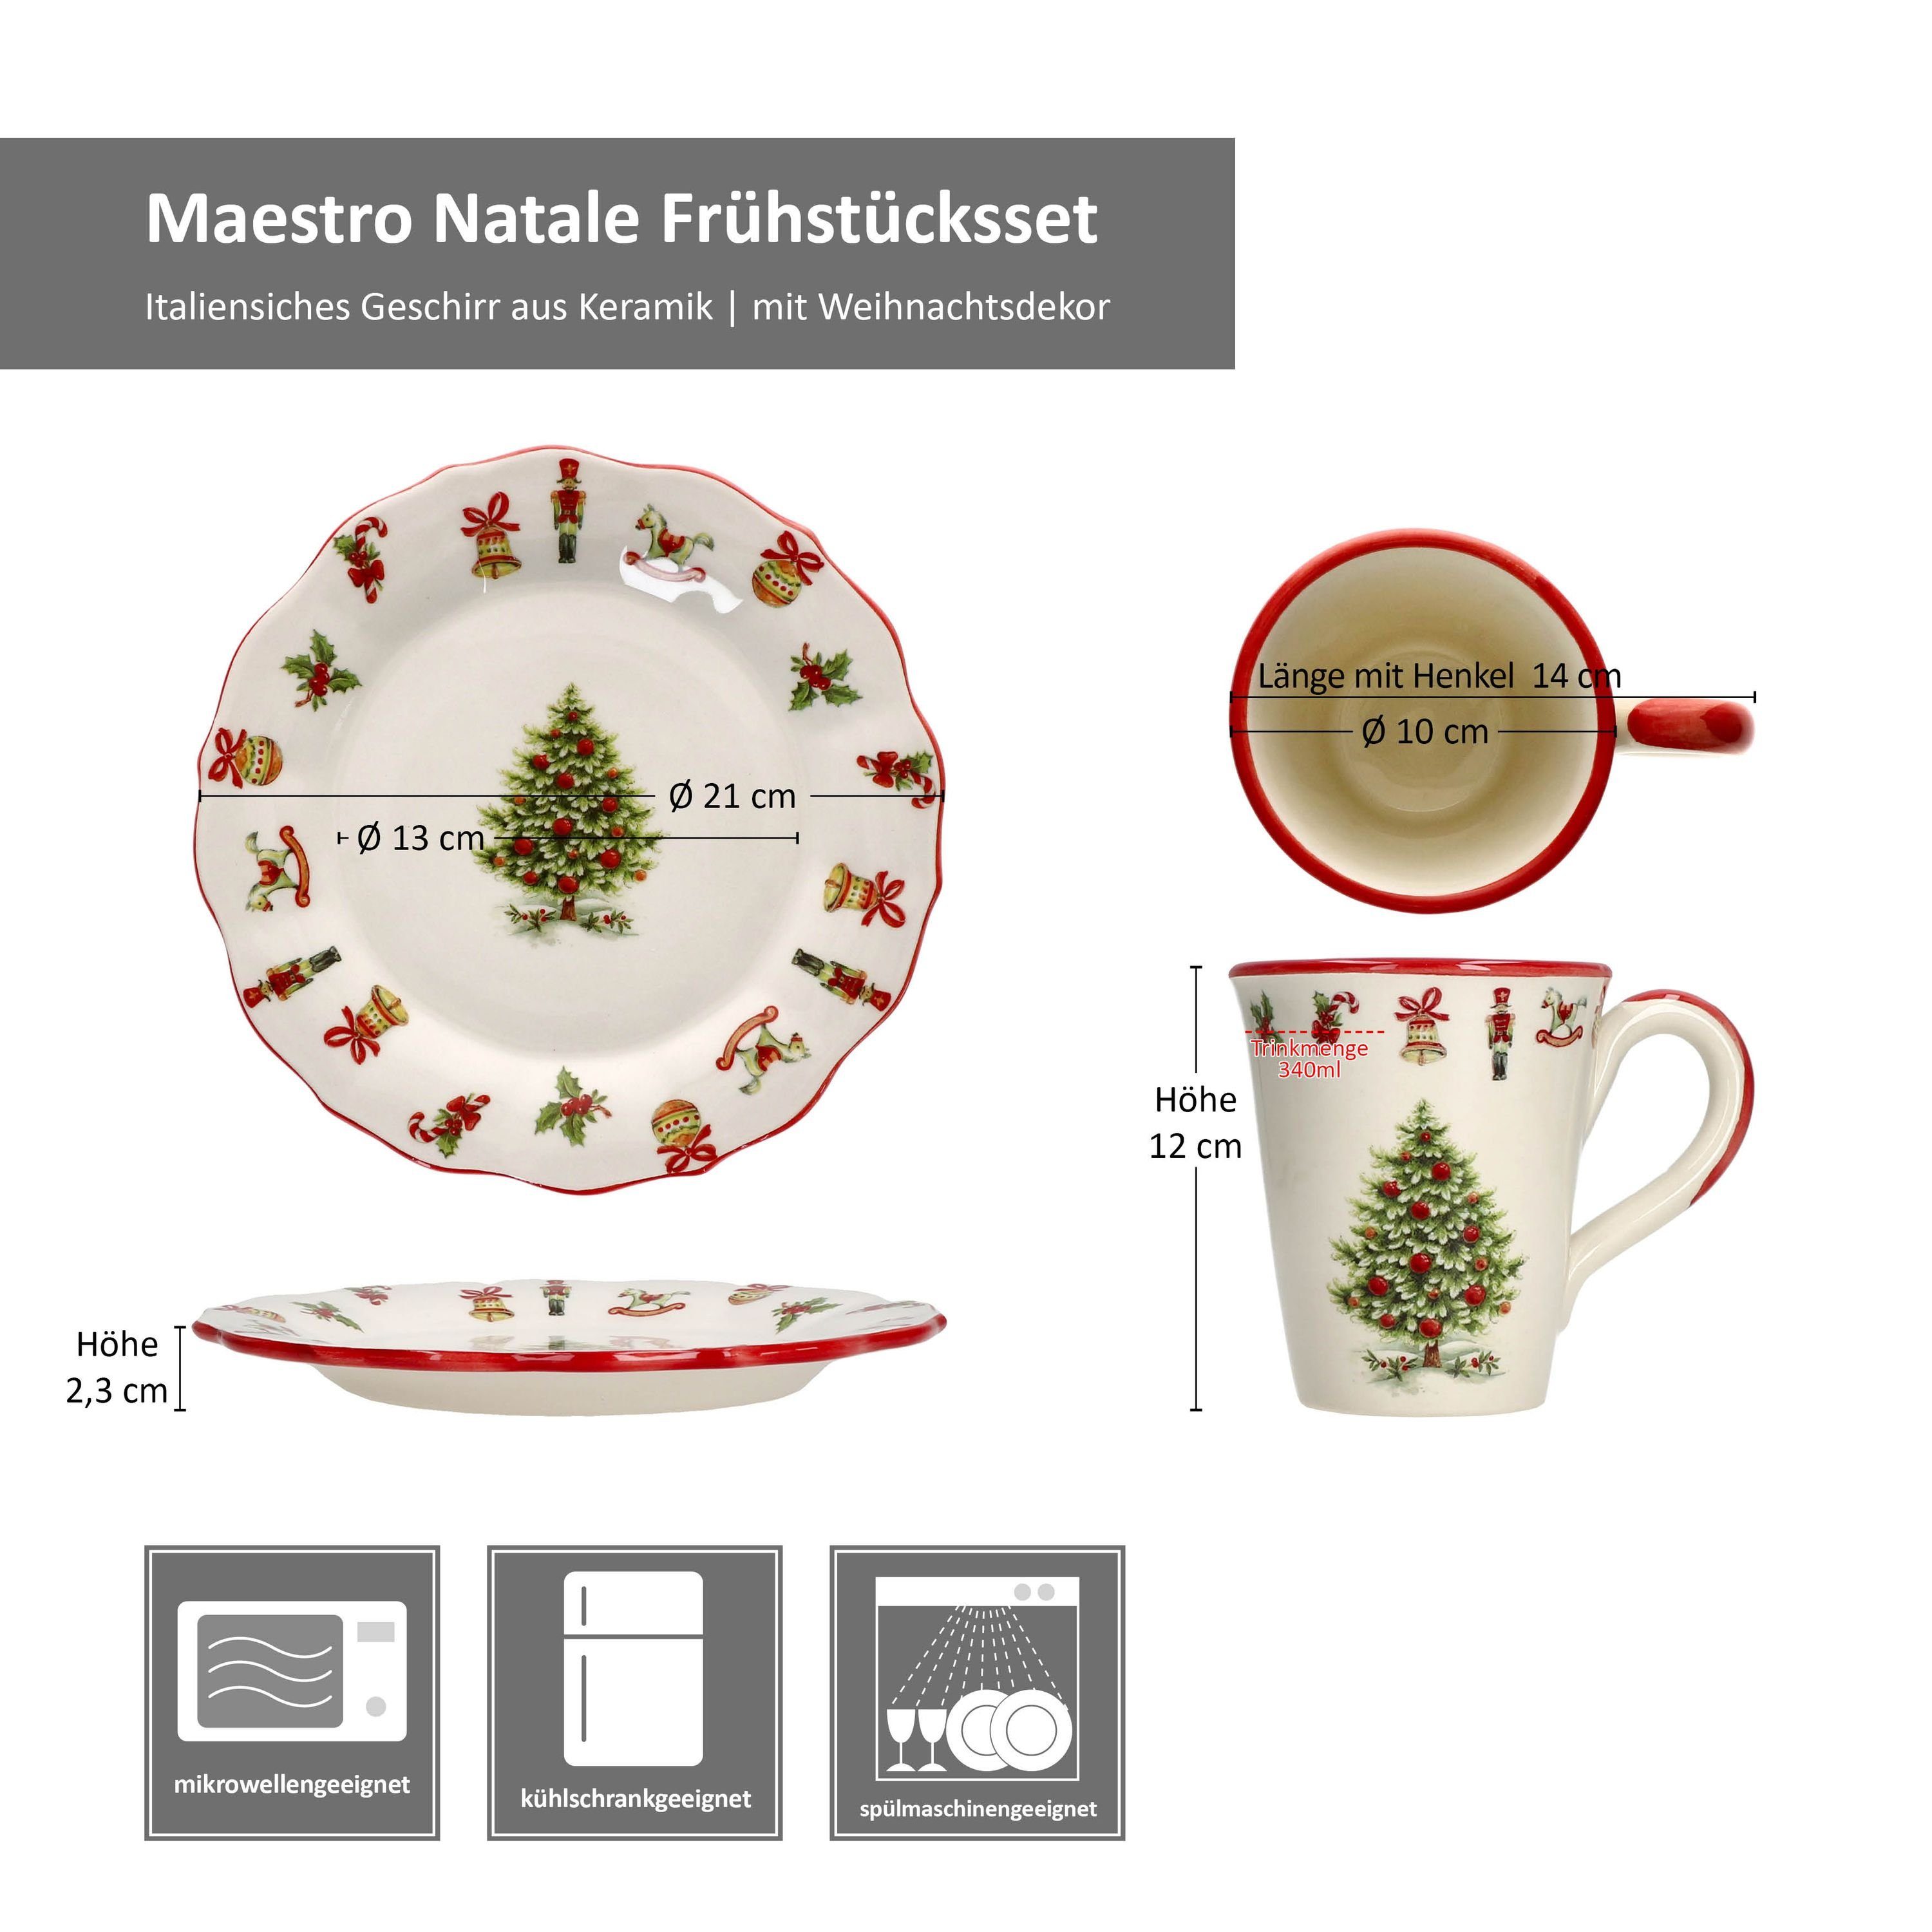 MamboCat Frühstücks-Geschirrset Maestro Natale 4tlg 2 Keramik Keramik Frühstücksset Weihnachten, Pers Teller